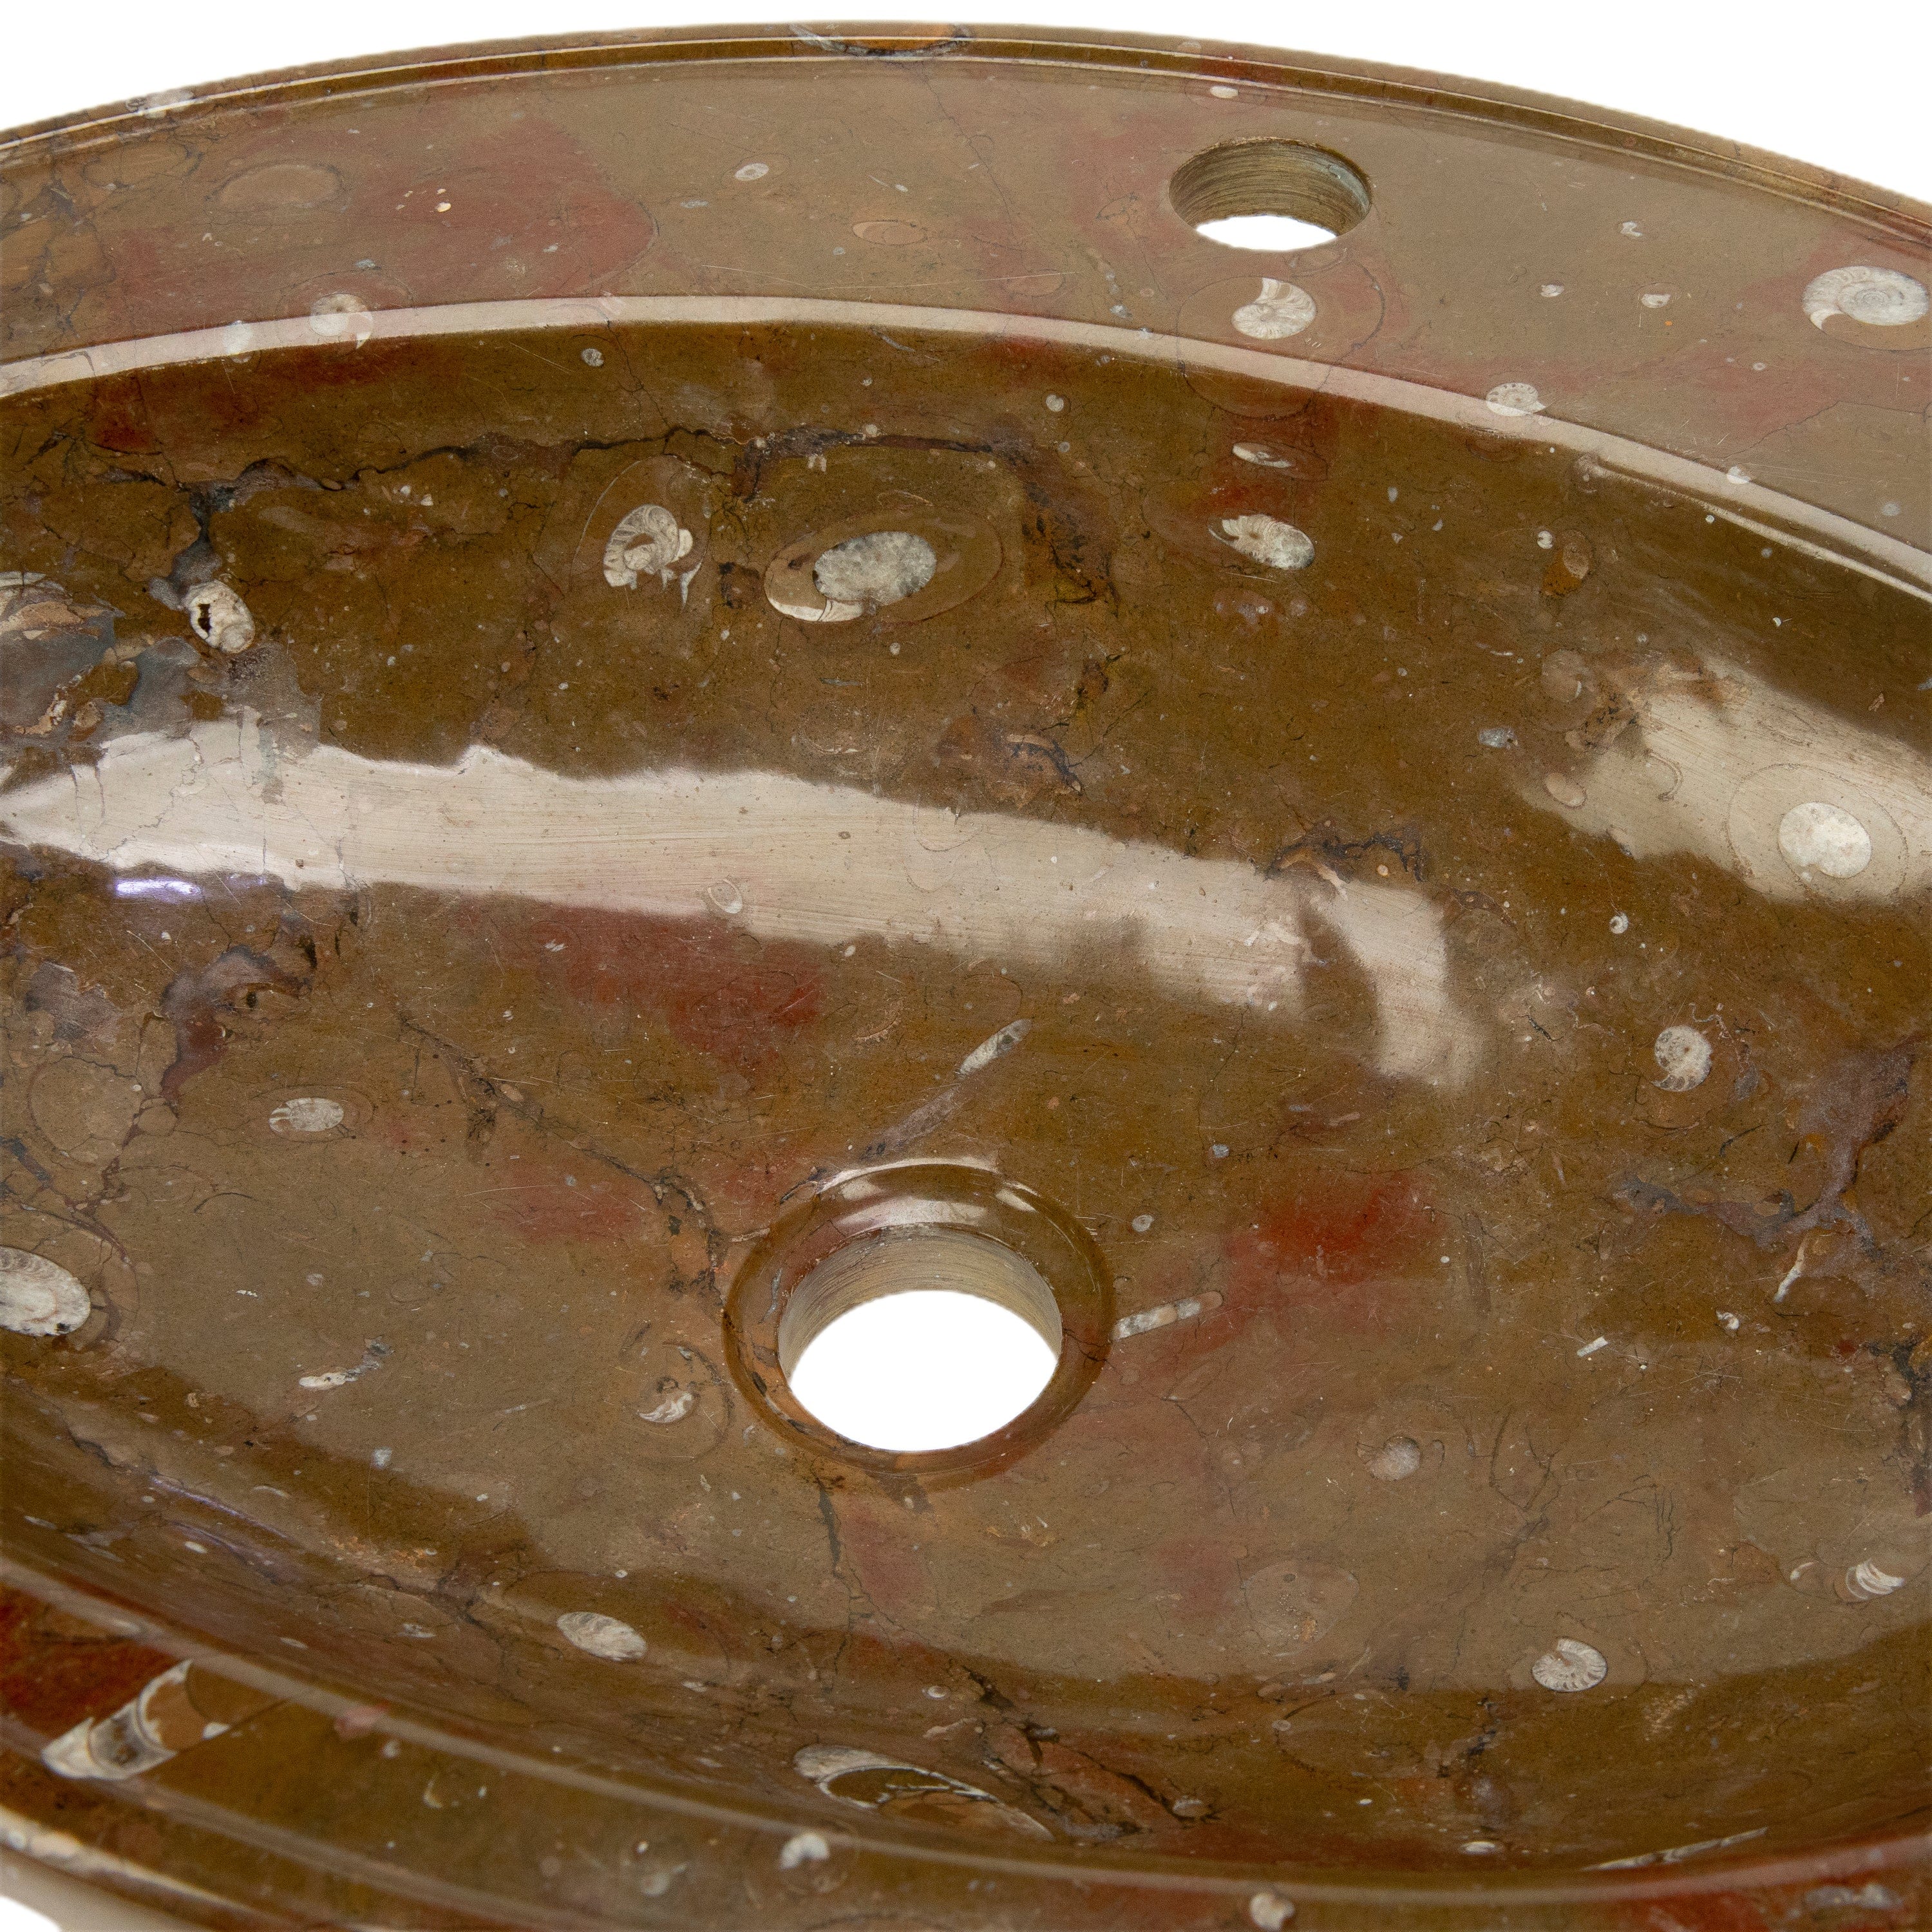 KALIFANO Ammonites Ammonite Fossil Sink Bowl from Morocco - 23" AMBOWL3200.009